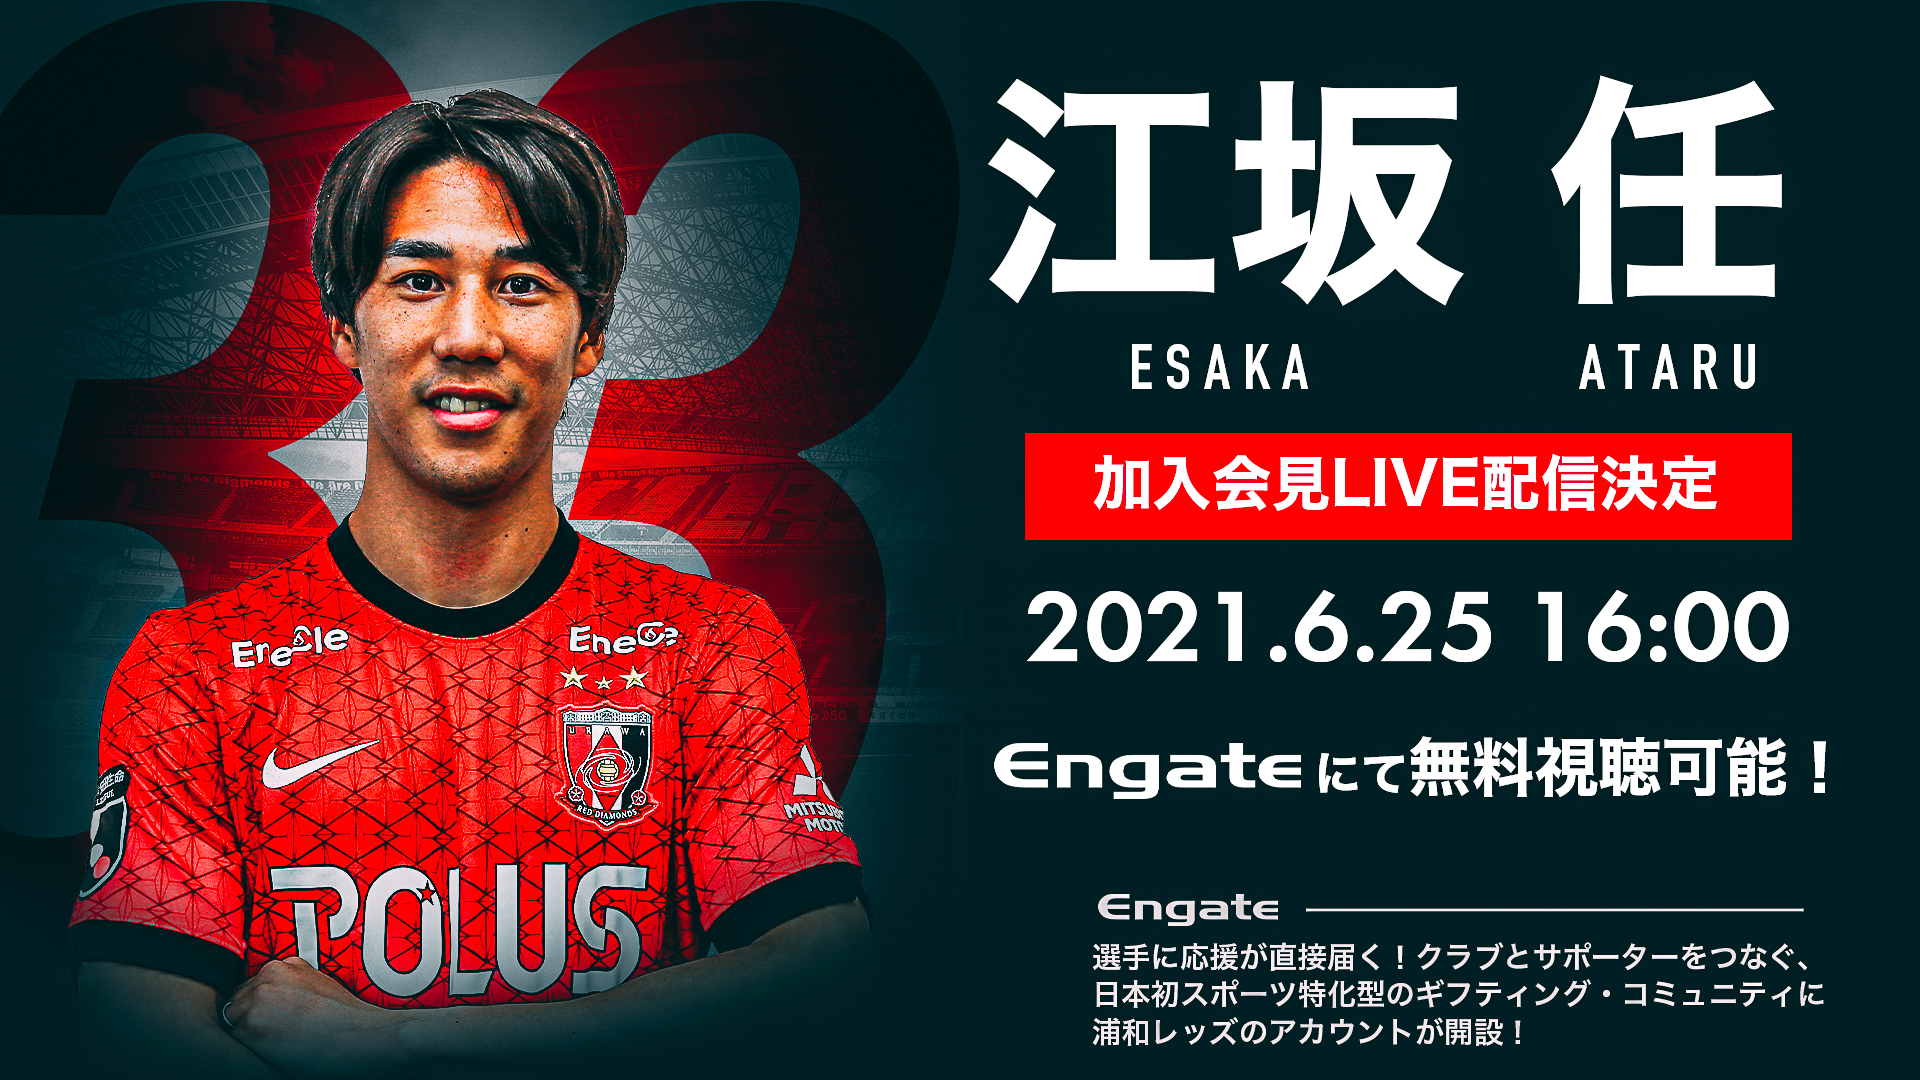 Engate エンゲート 日本最大級のスポーツ特化型ギフティングサービス